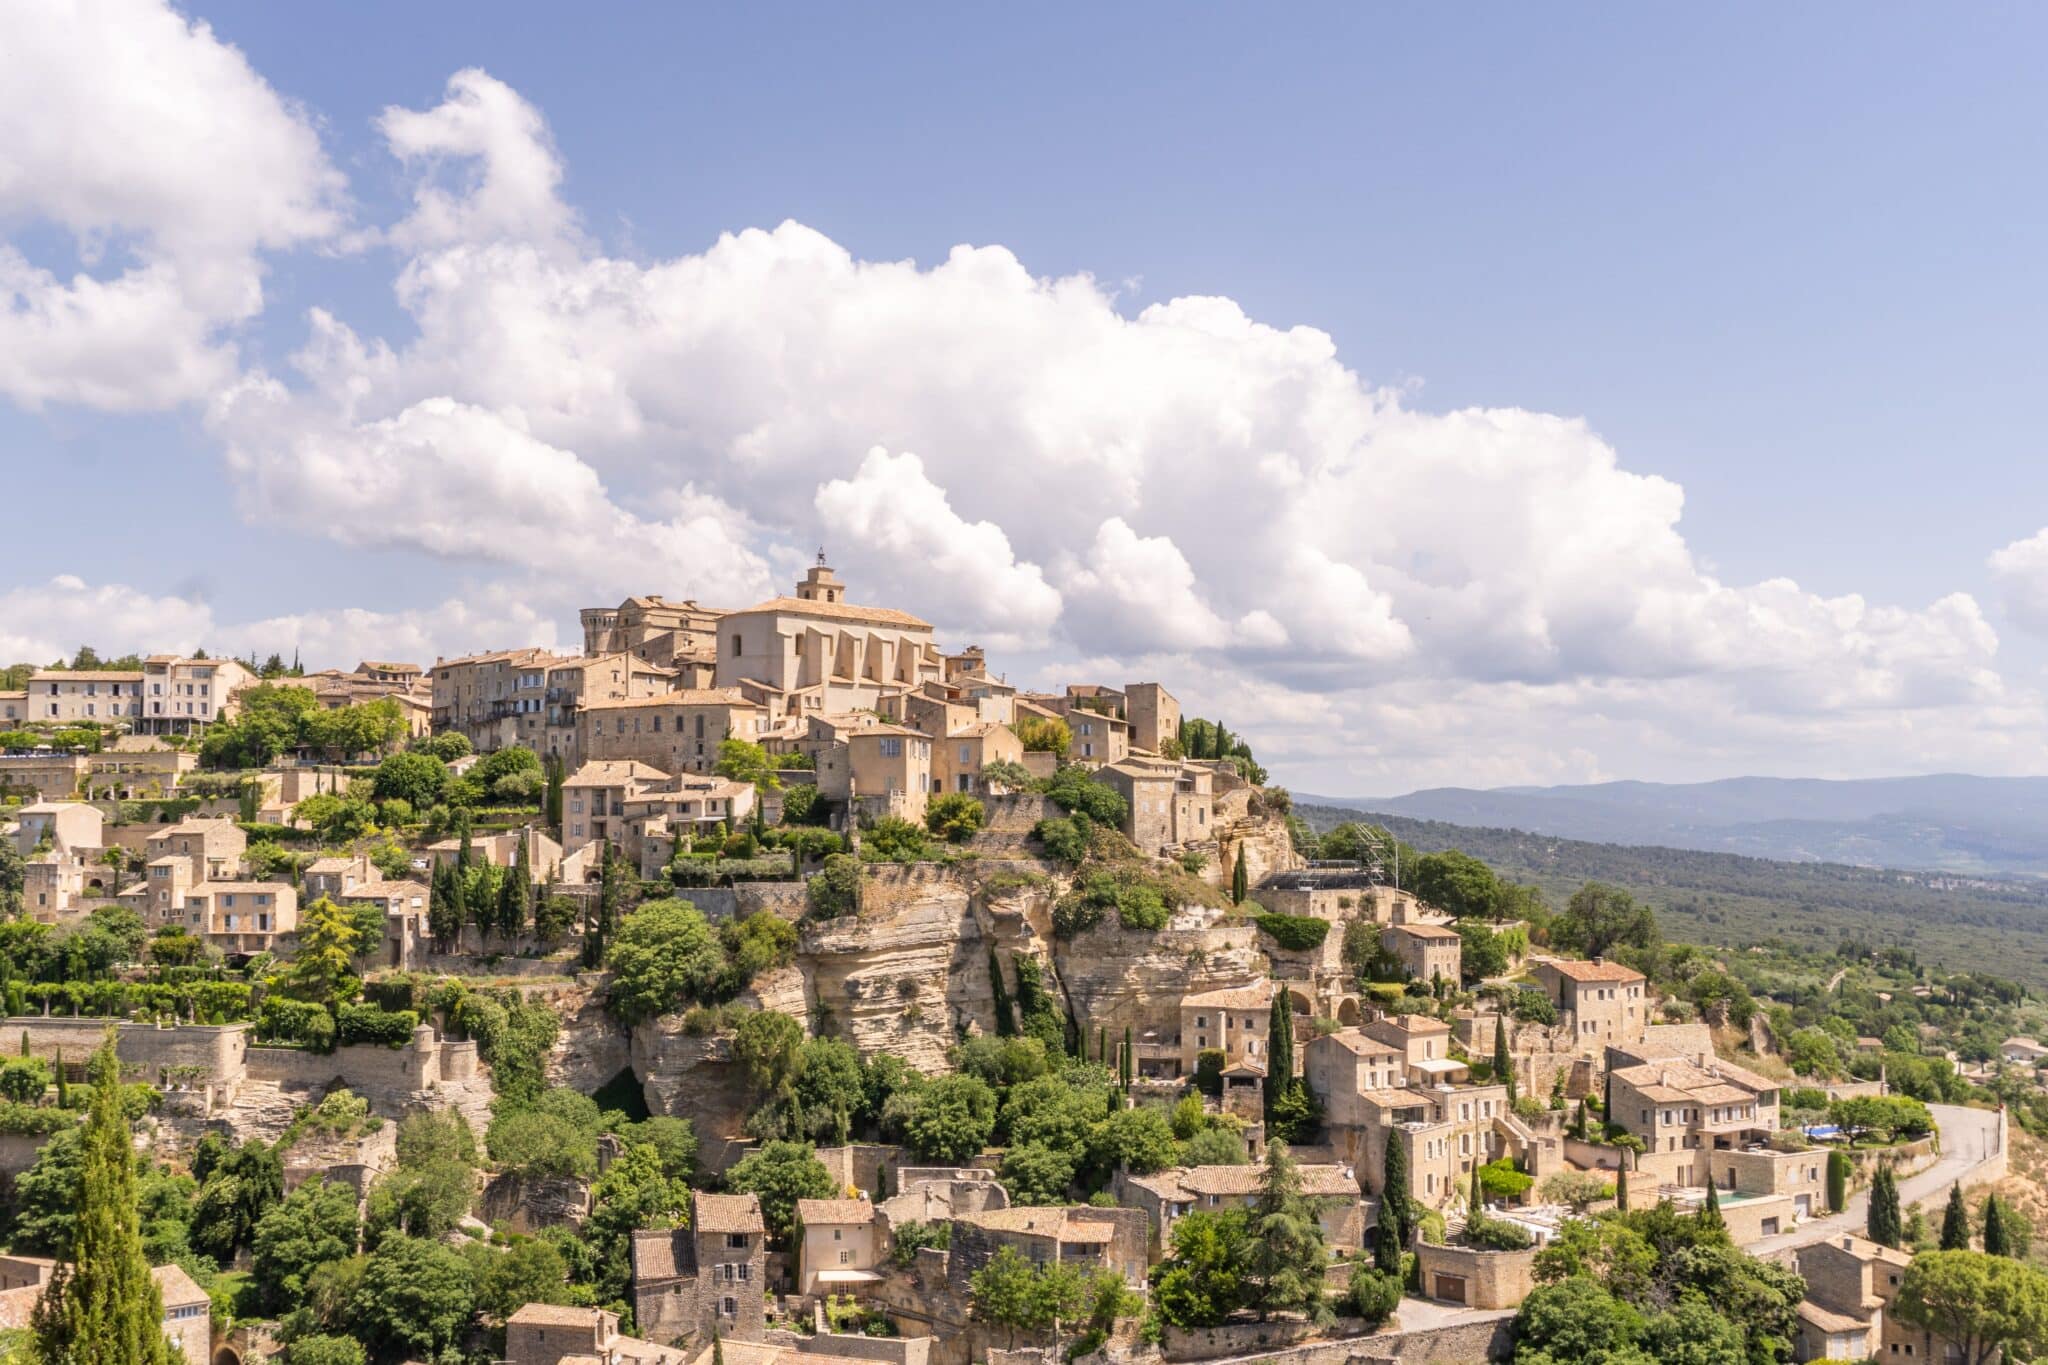 The hilltop village of Gordes in Lubéron, Provence, France.